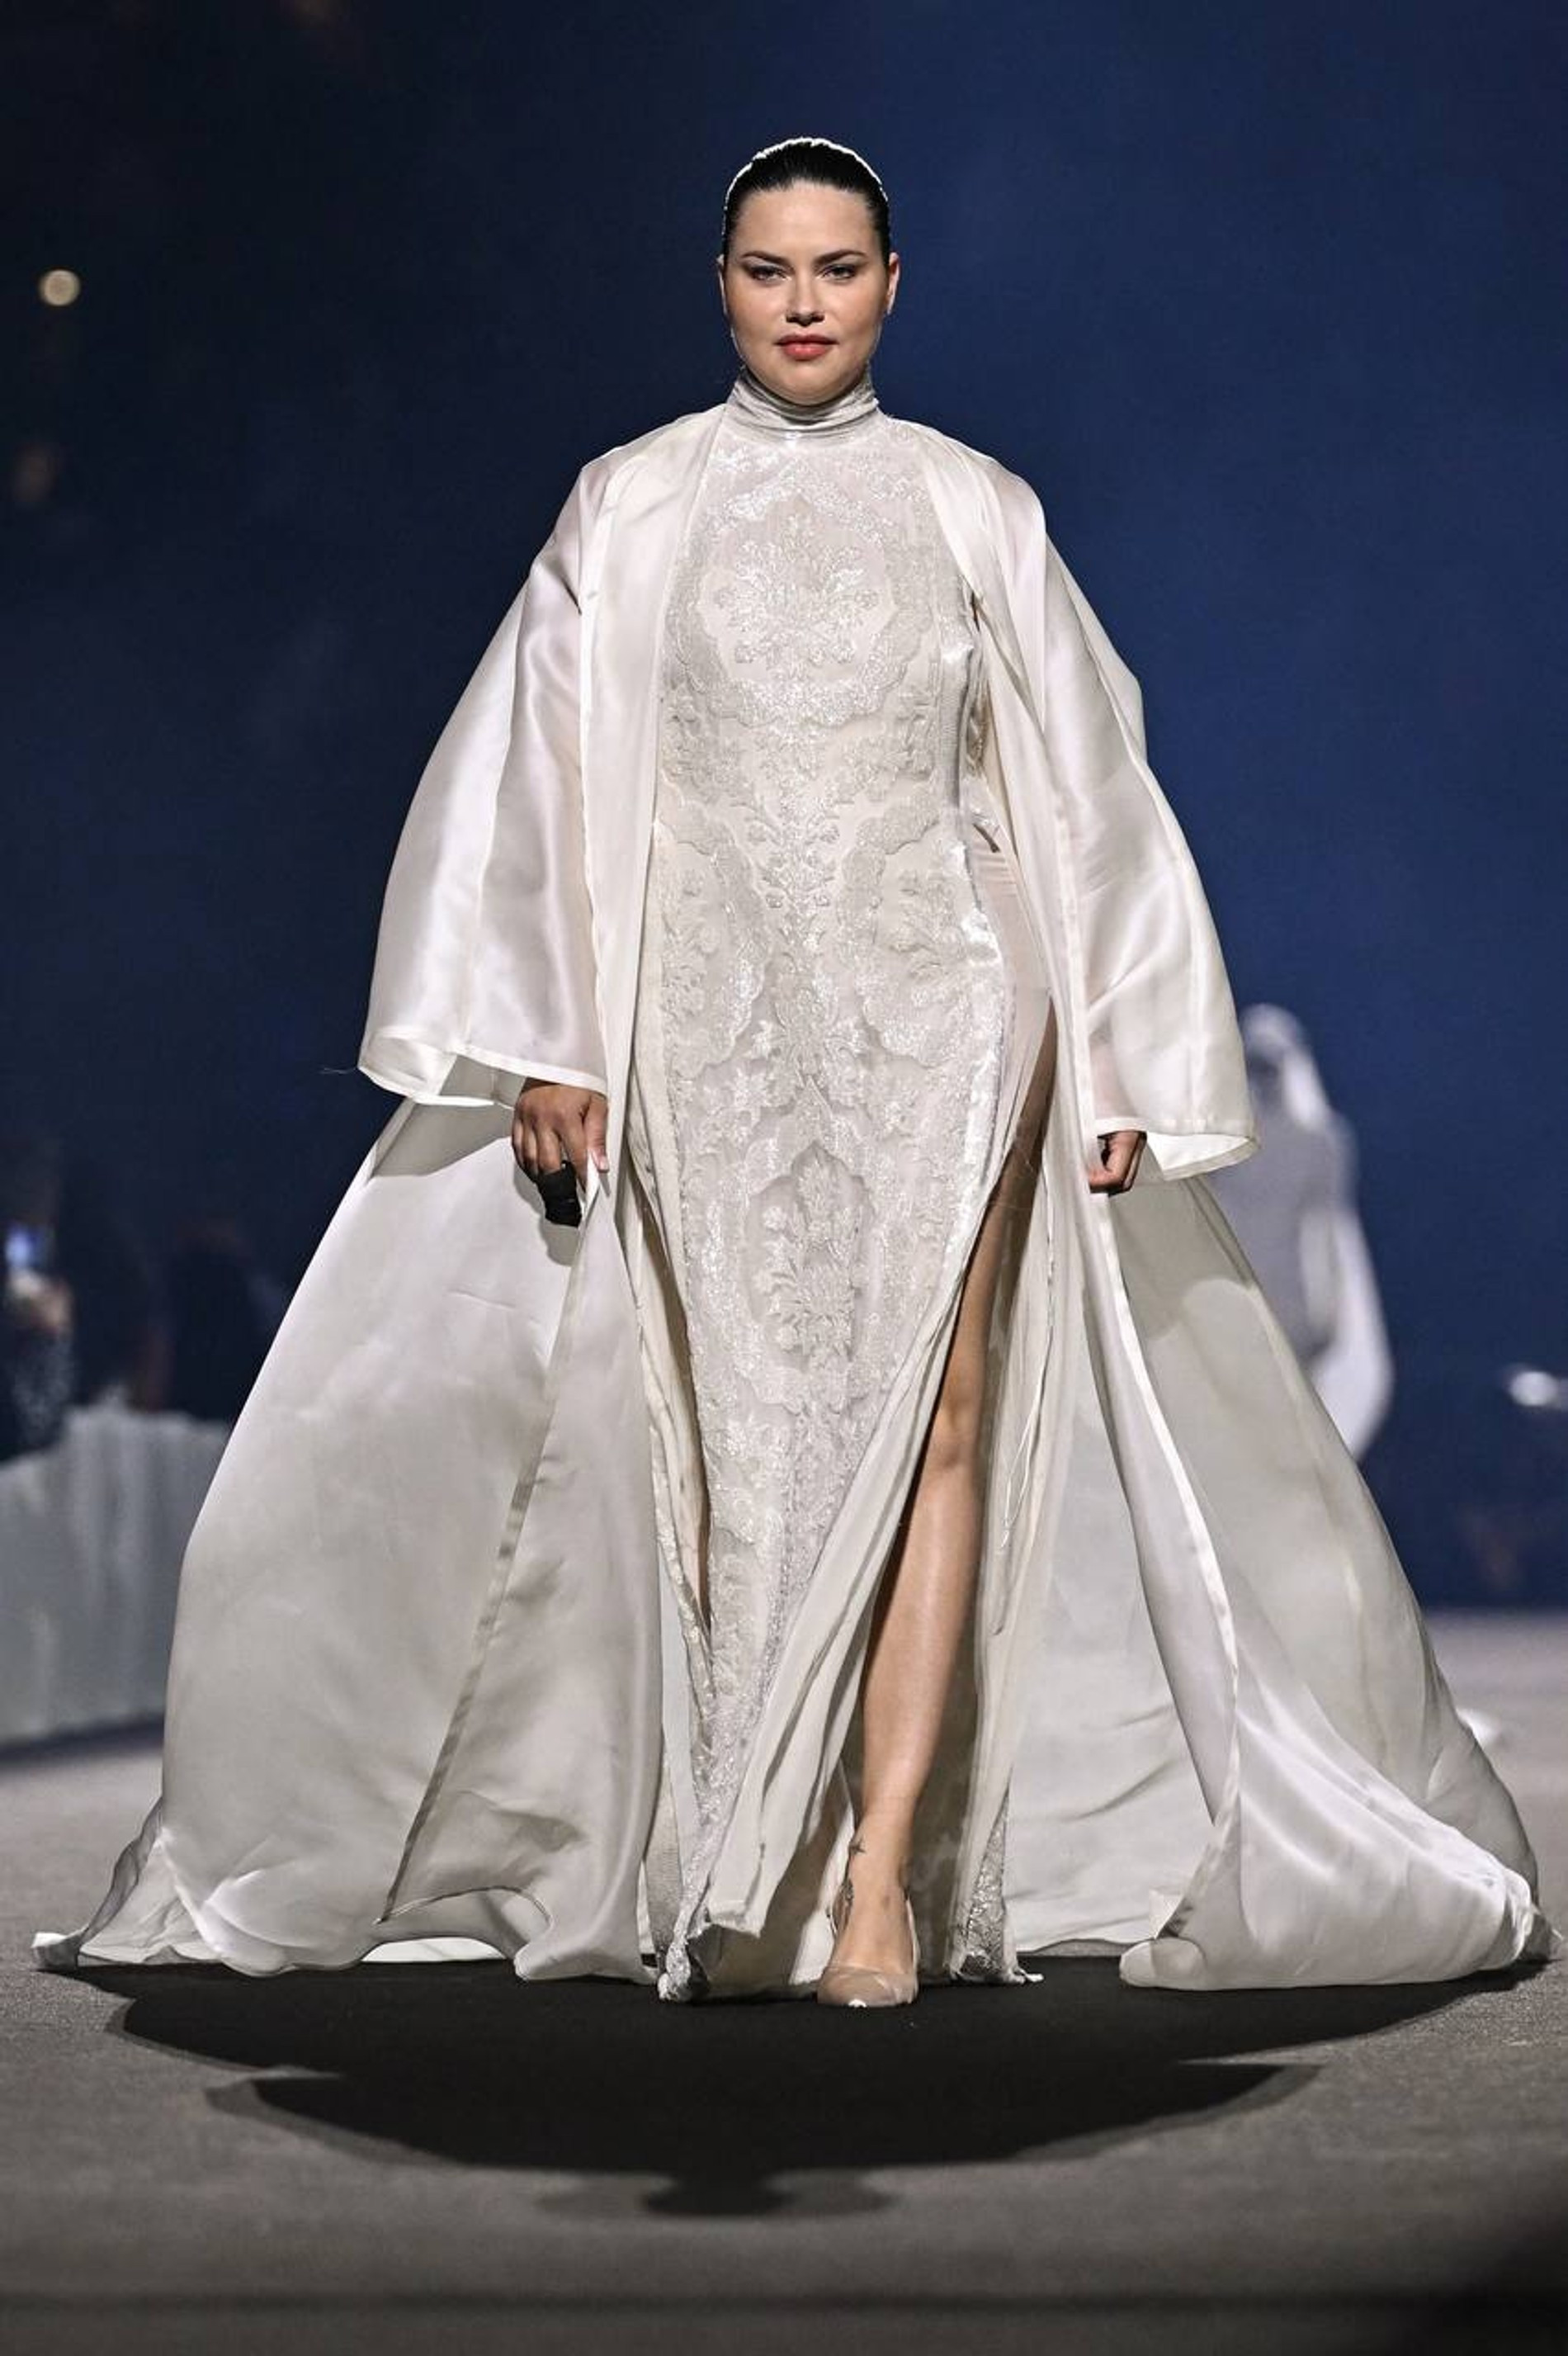 Адриана Лима на показе Qatar Fashion United by CR Runway
Фото: телеграм